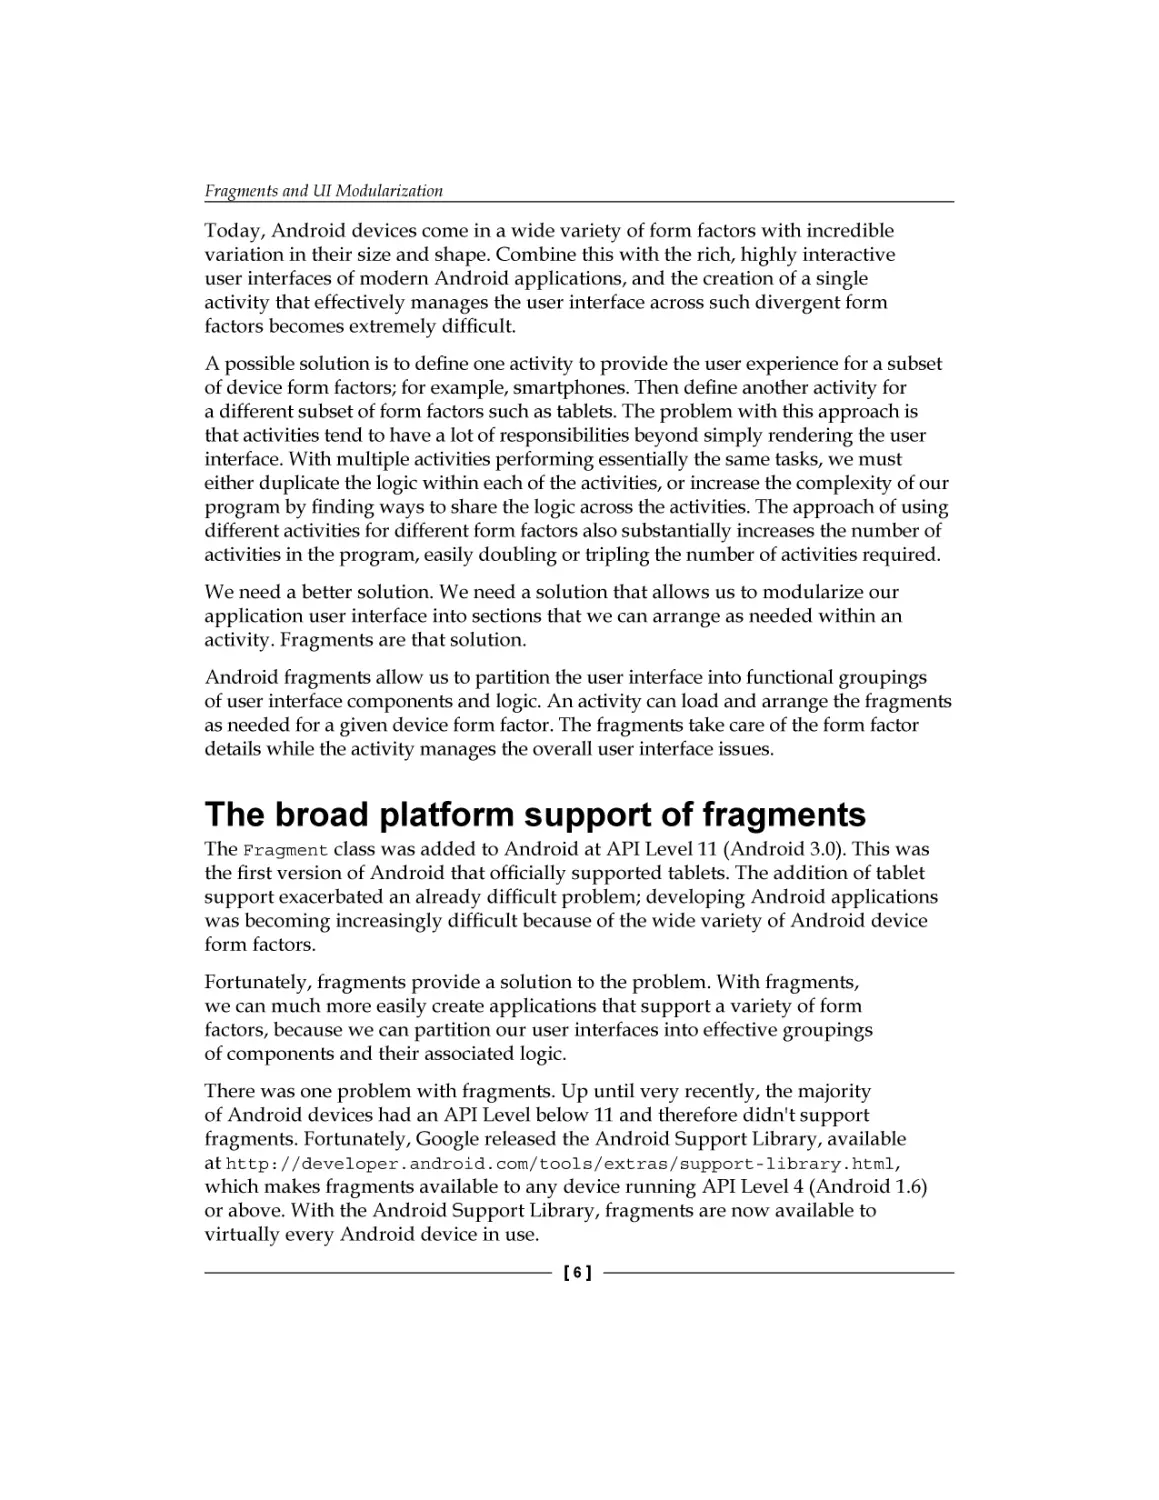 The broad platform support of fragments